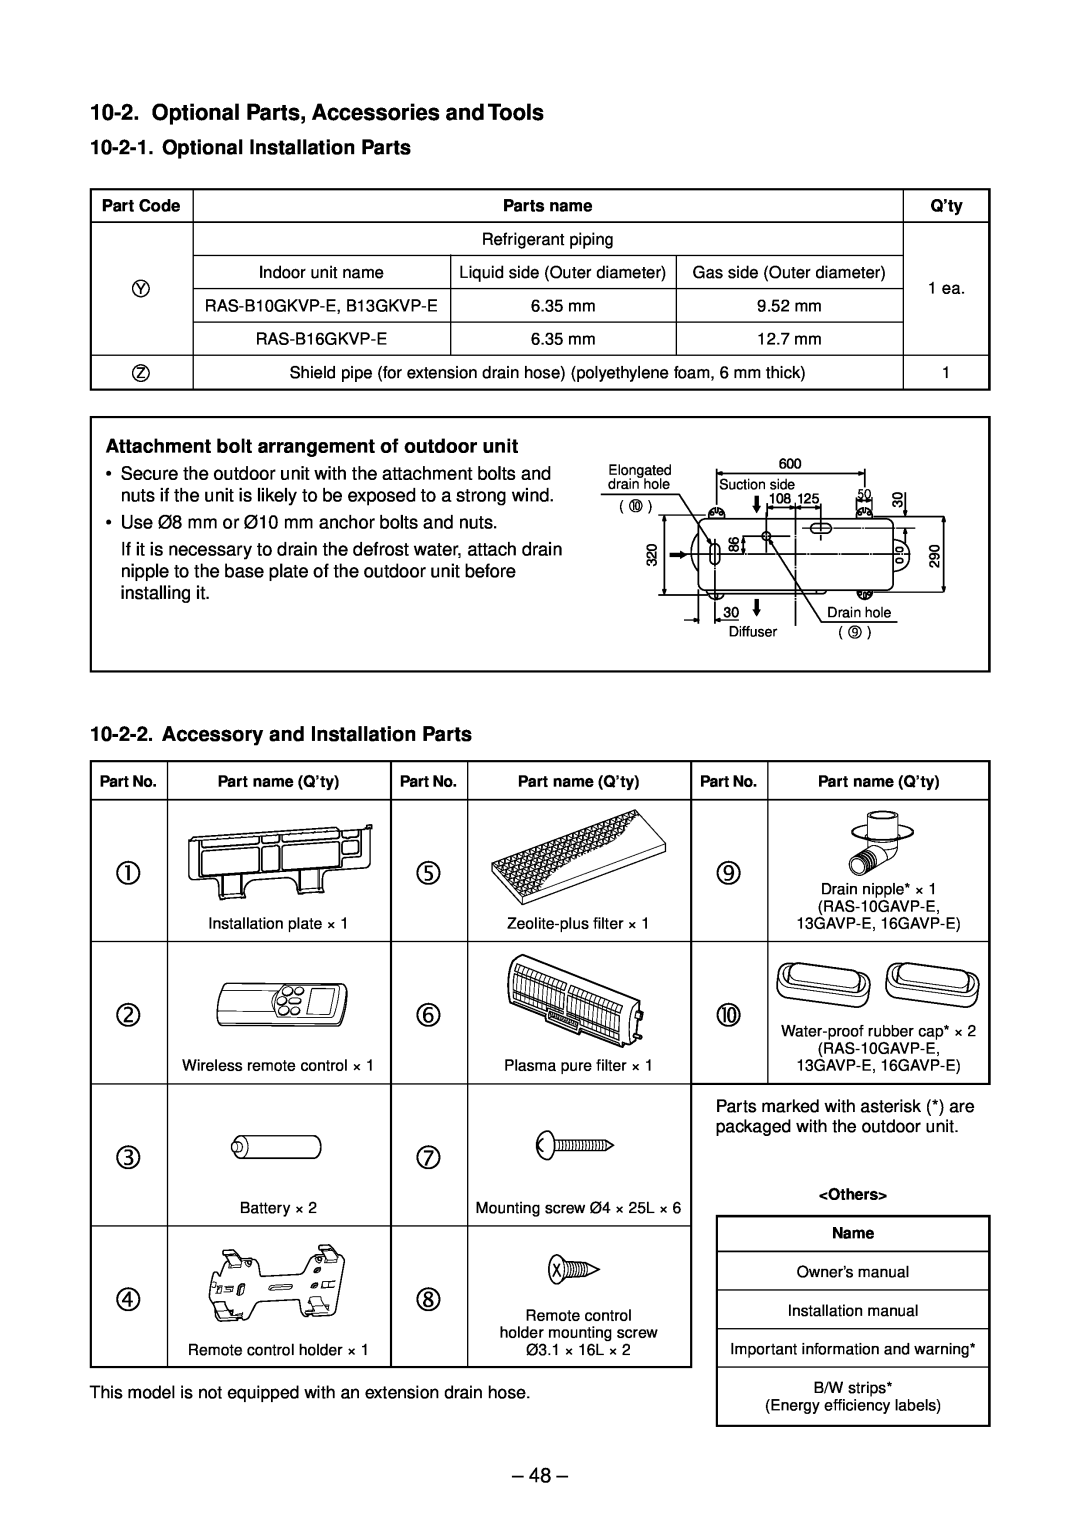 Toshiba RAS-B16GKVP-E Optional Parts, Accessories and Tools, Optional Installation Parts, Accessory and Installation Parts 